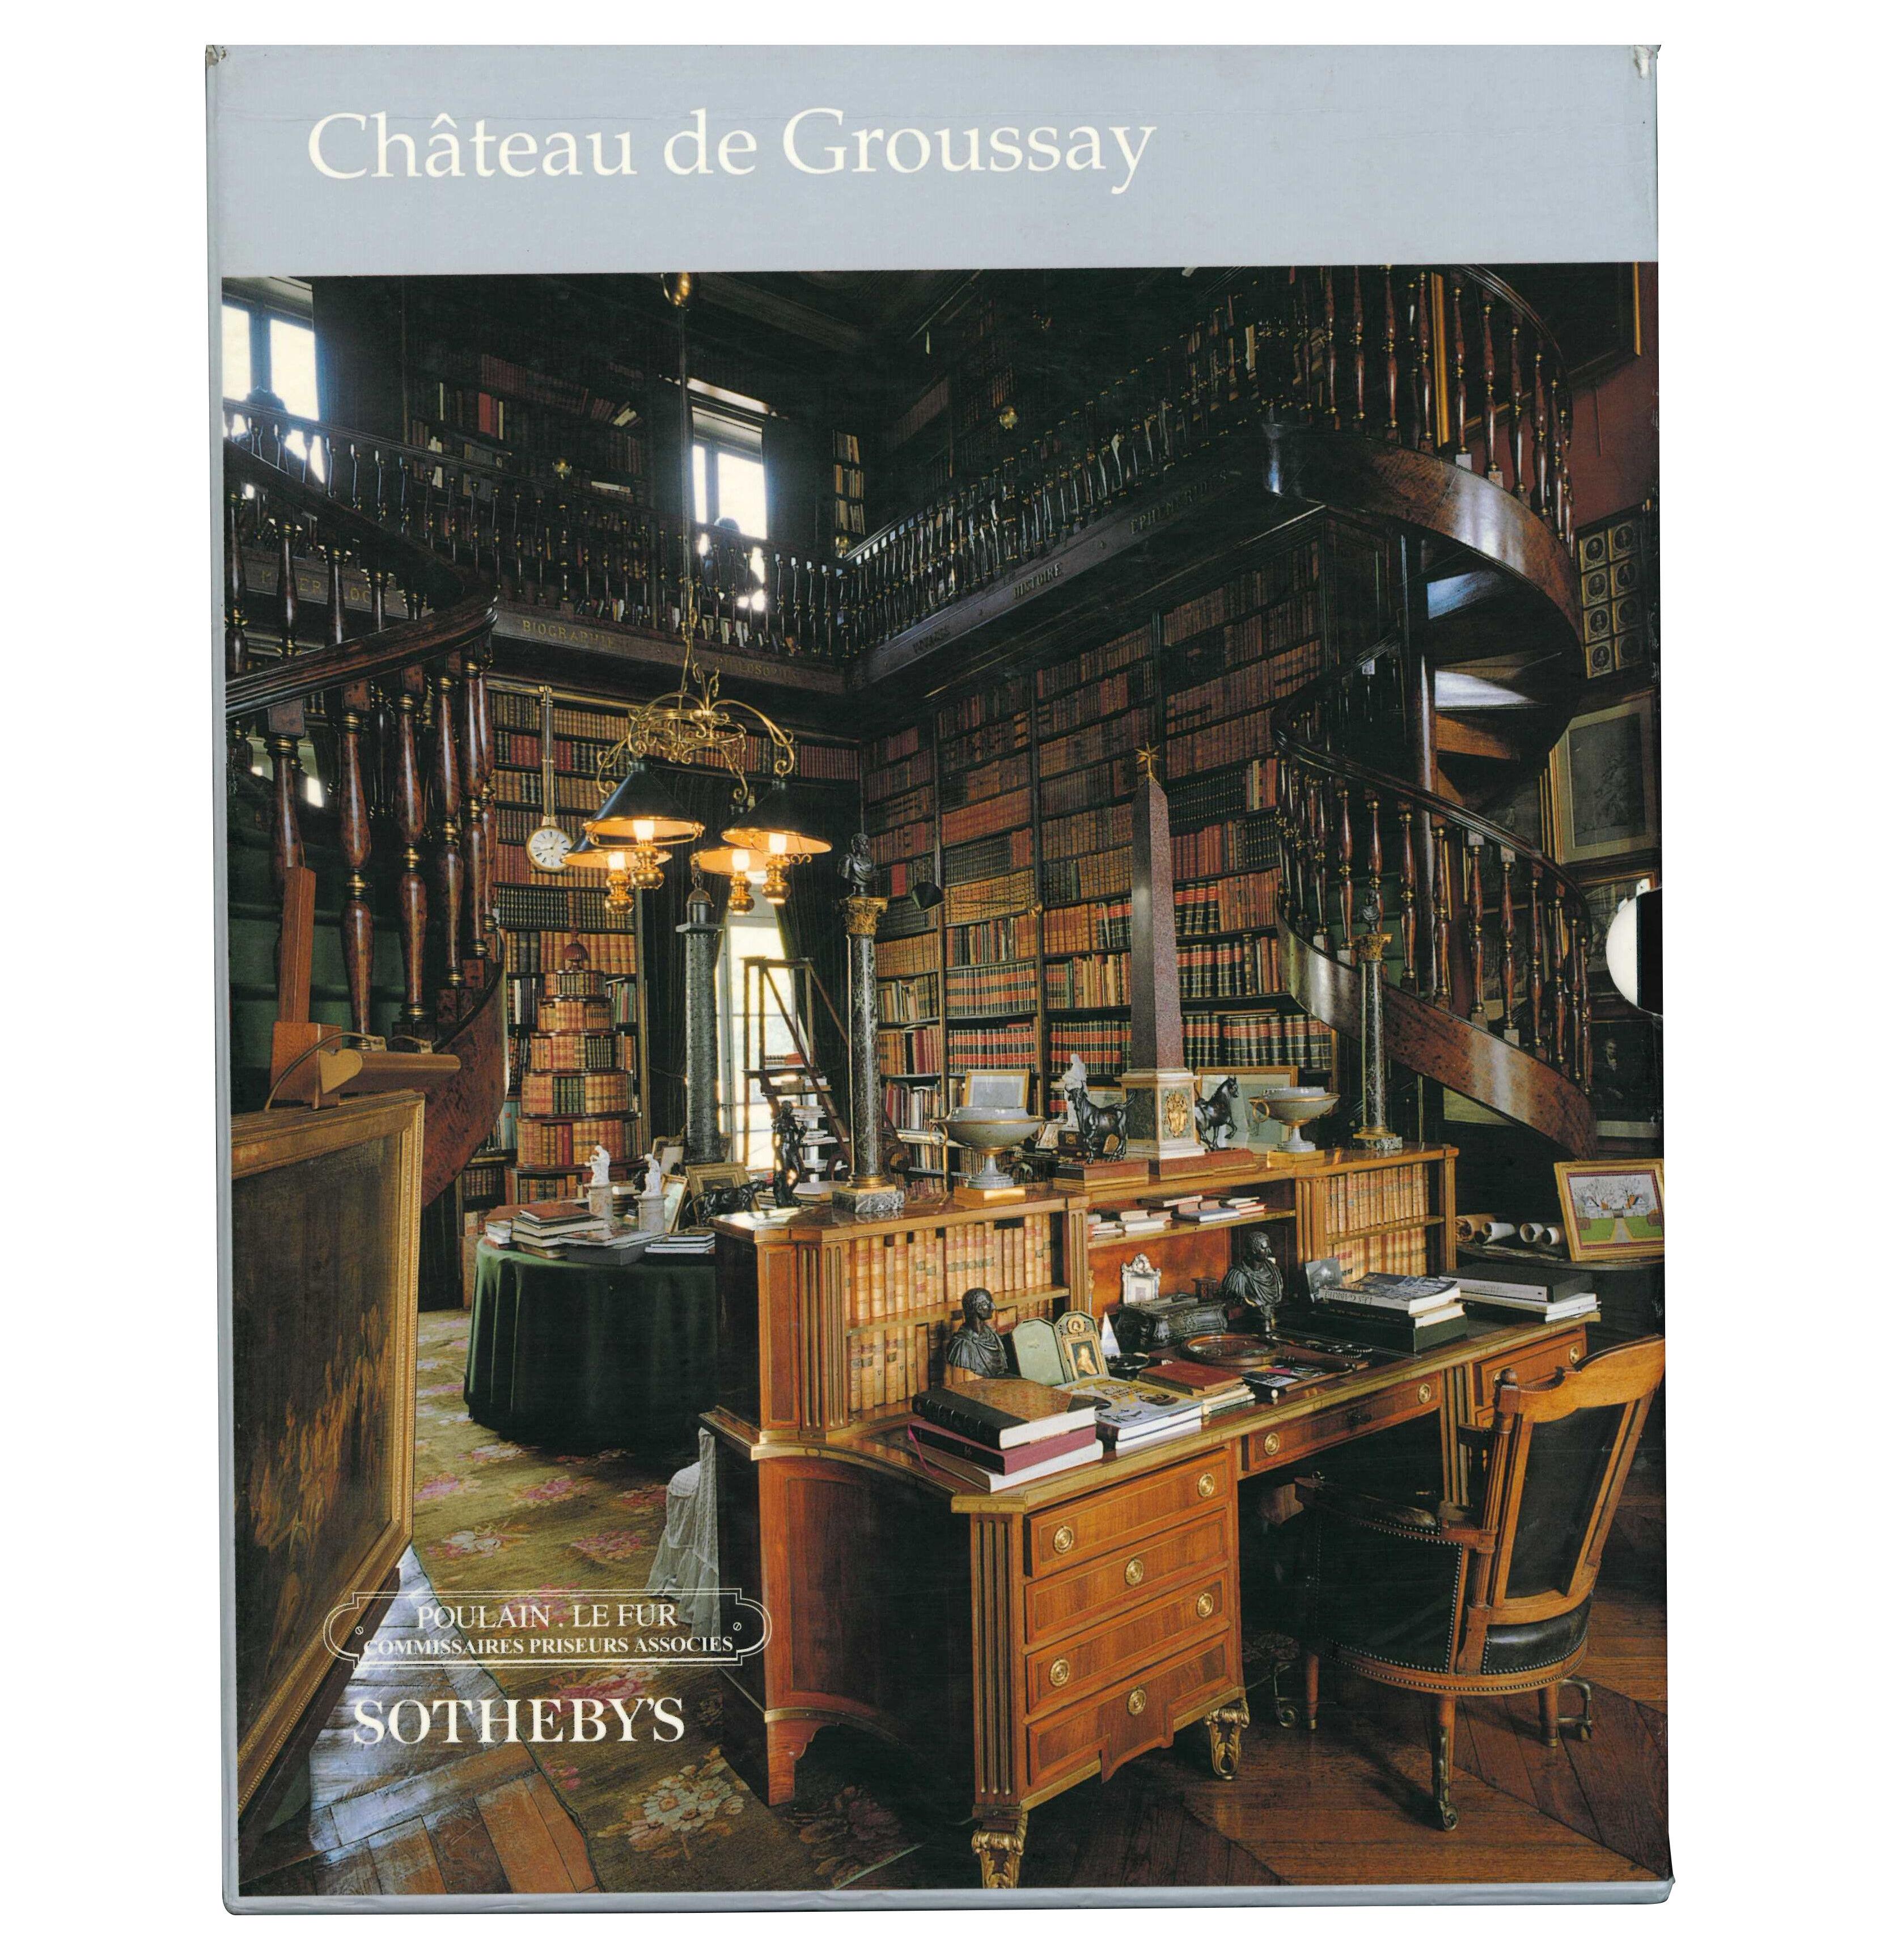 SOTHEBY'S JUNE 1999 - CHATEAU GROUSSAY SALE CATALOGUES. Books